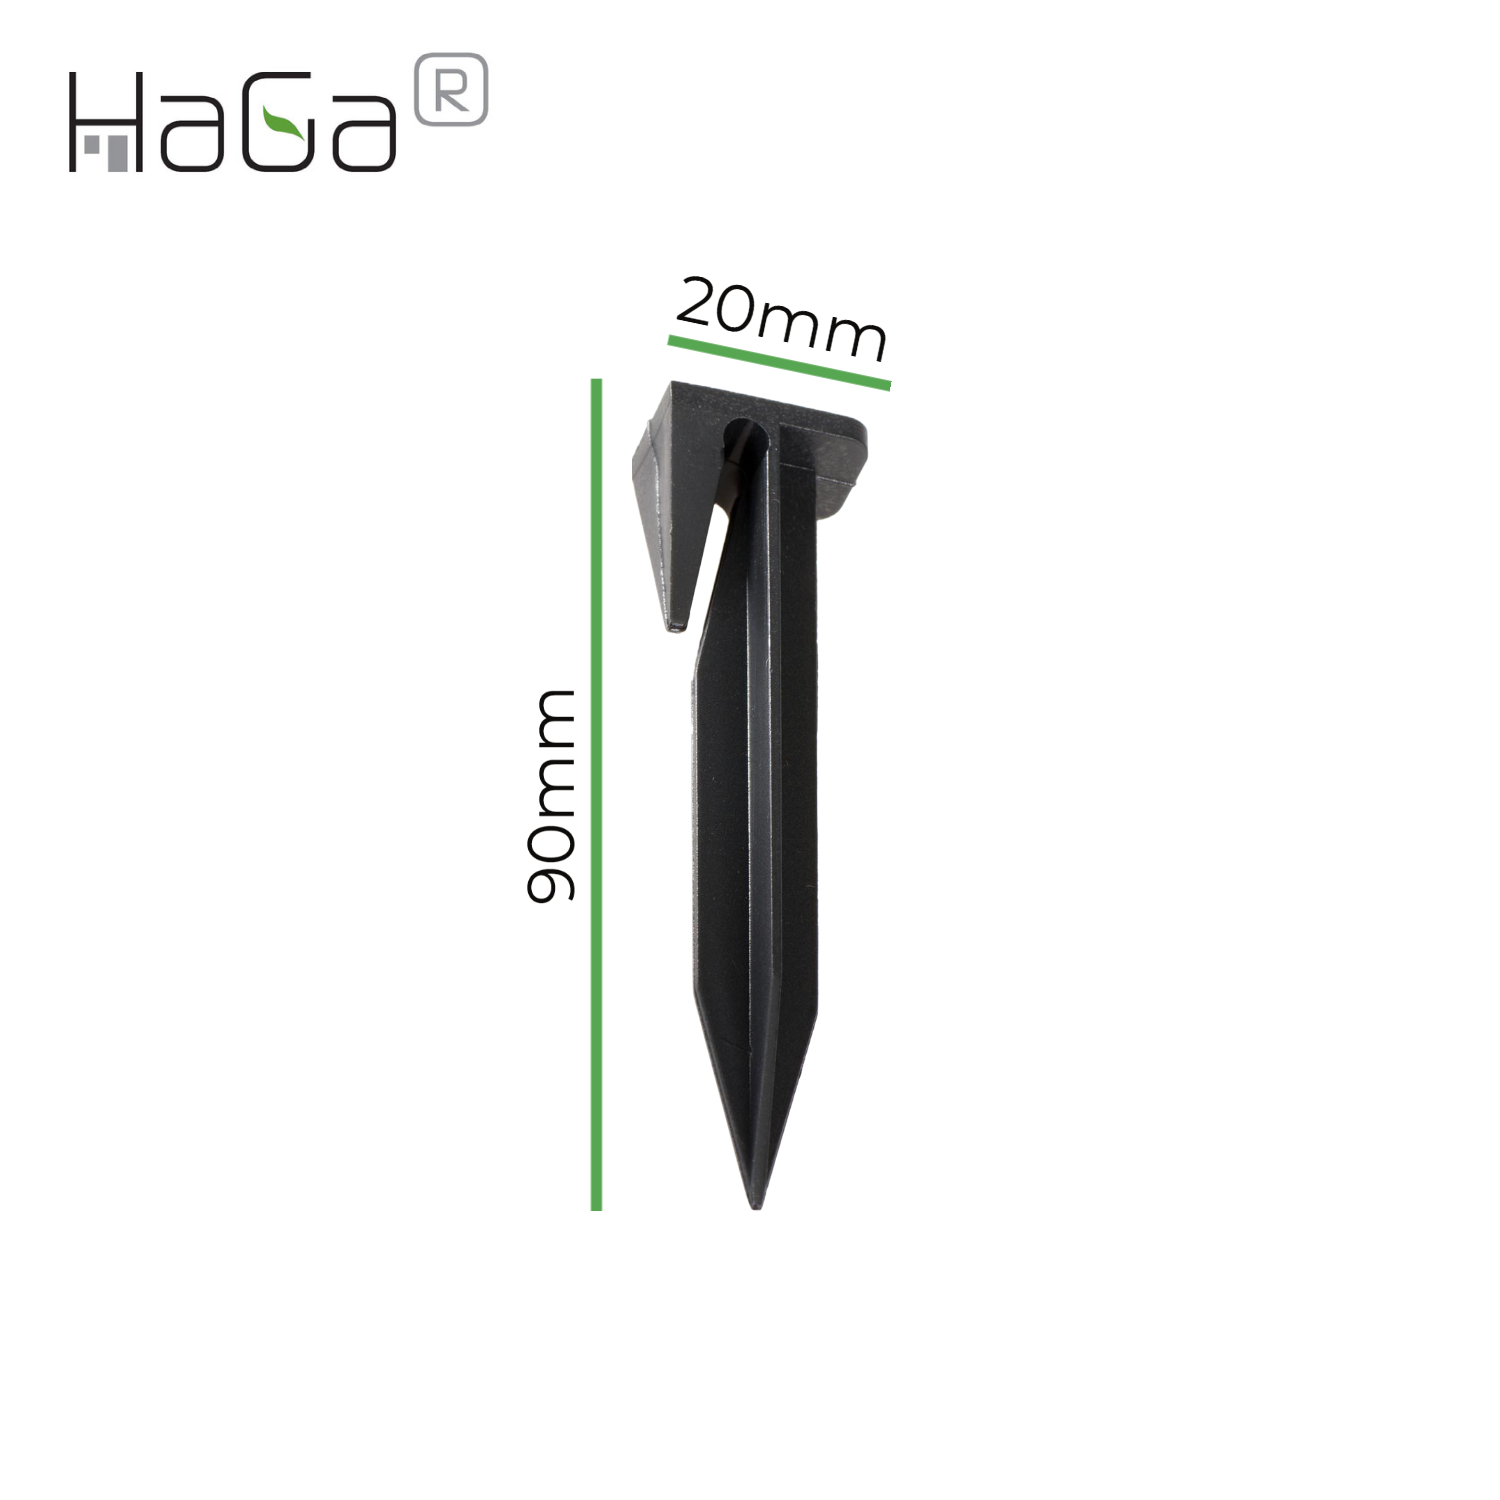 HaGa® Erdnägel für Mähroboter 500 Stück Begrenzugskabel-Erdhaken